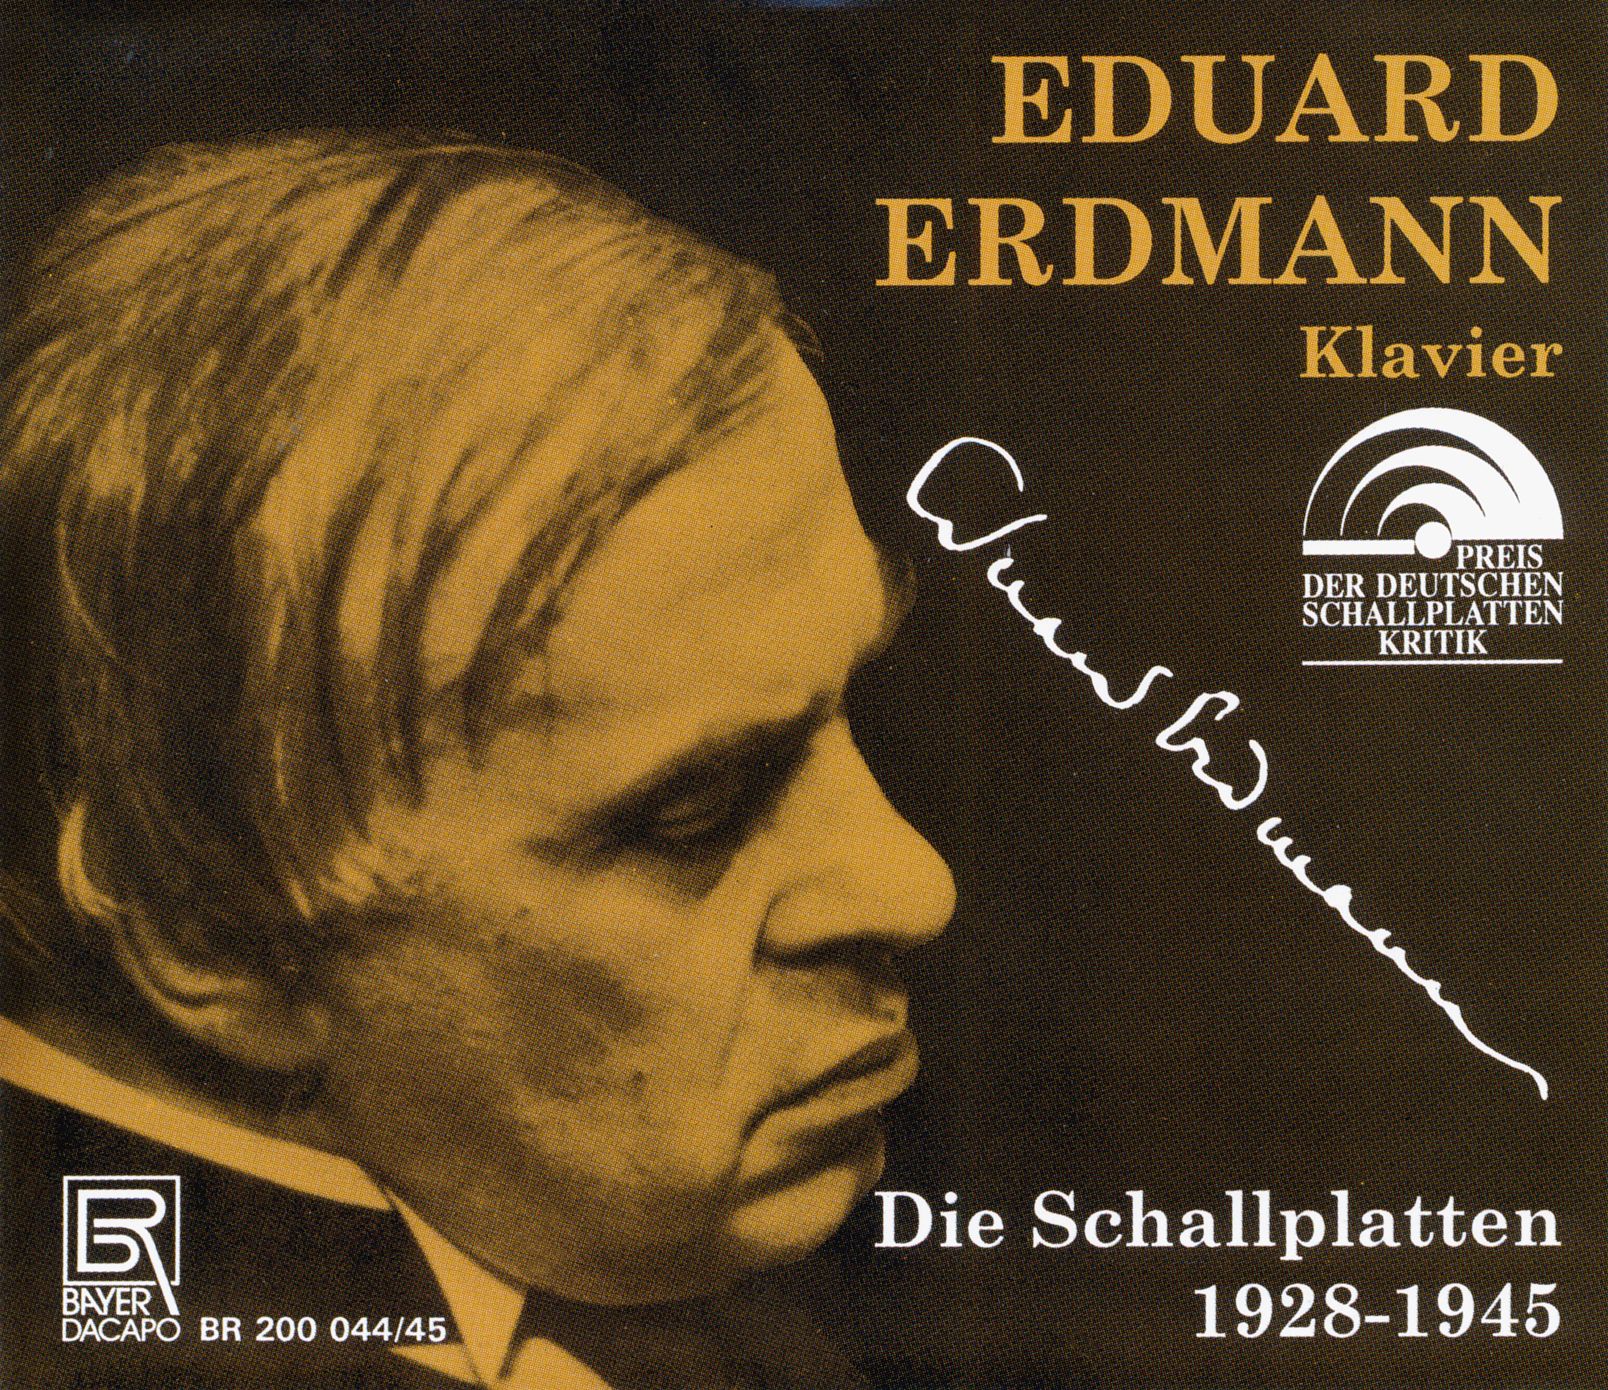 Eduard Erdmann - Schallplattenaufnahmen 1928-45